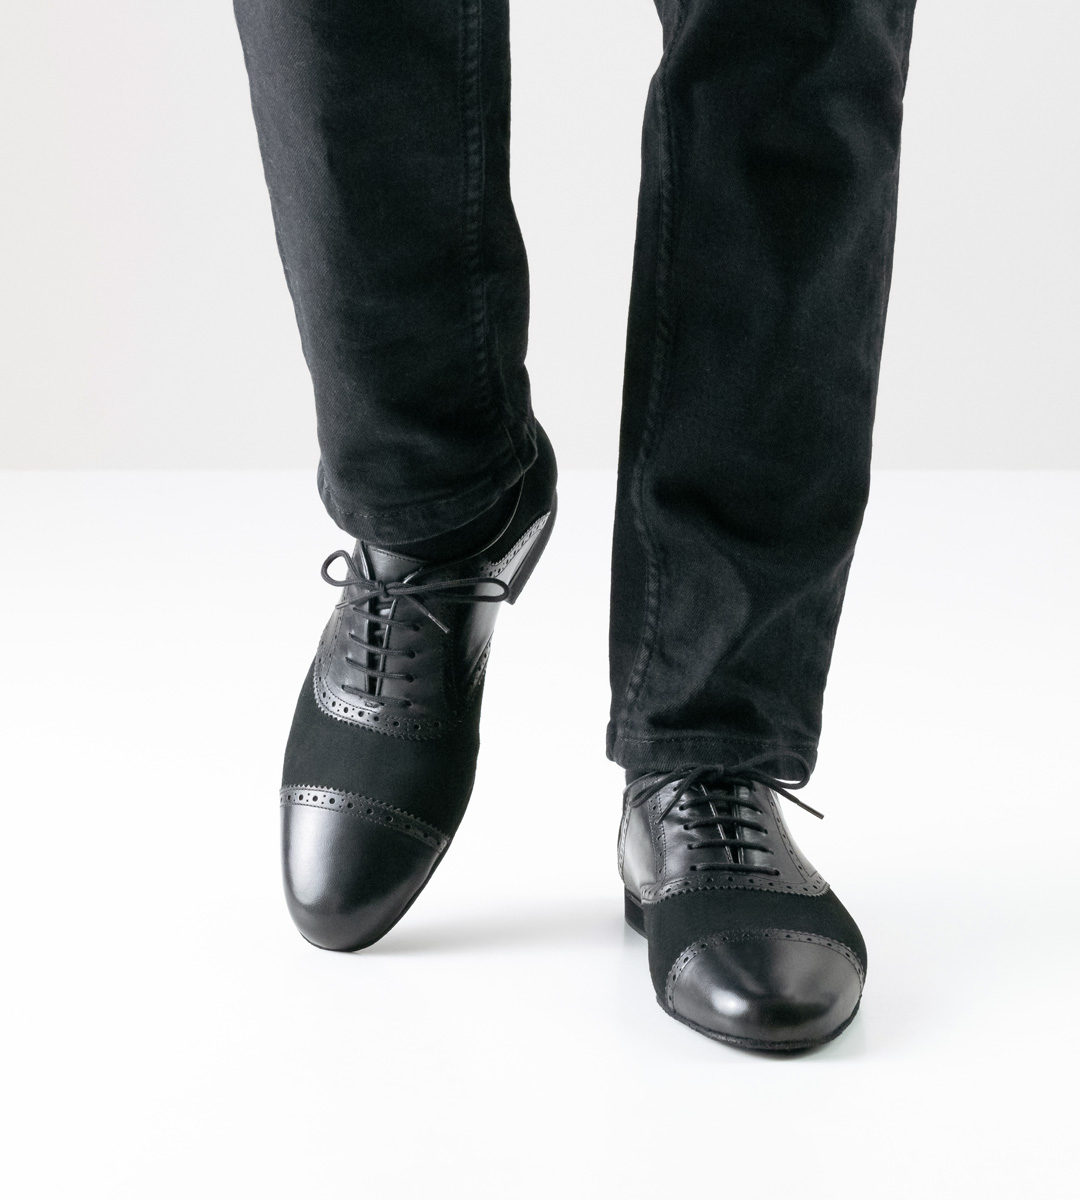 Jeans in black with Werner Kern men's dance shoe in black